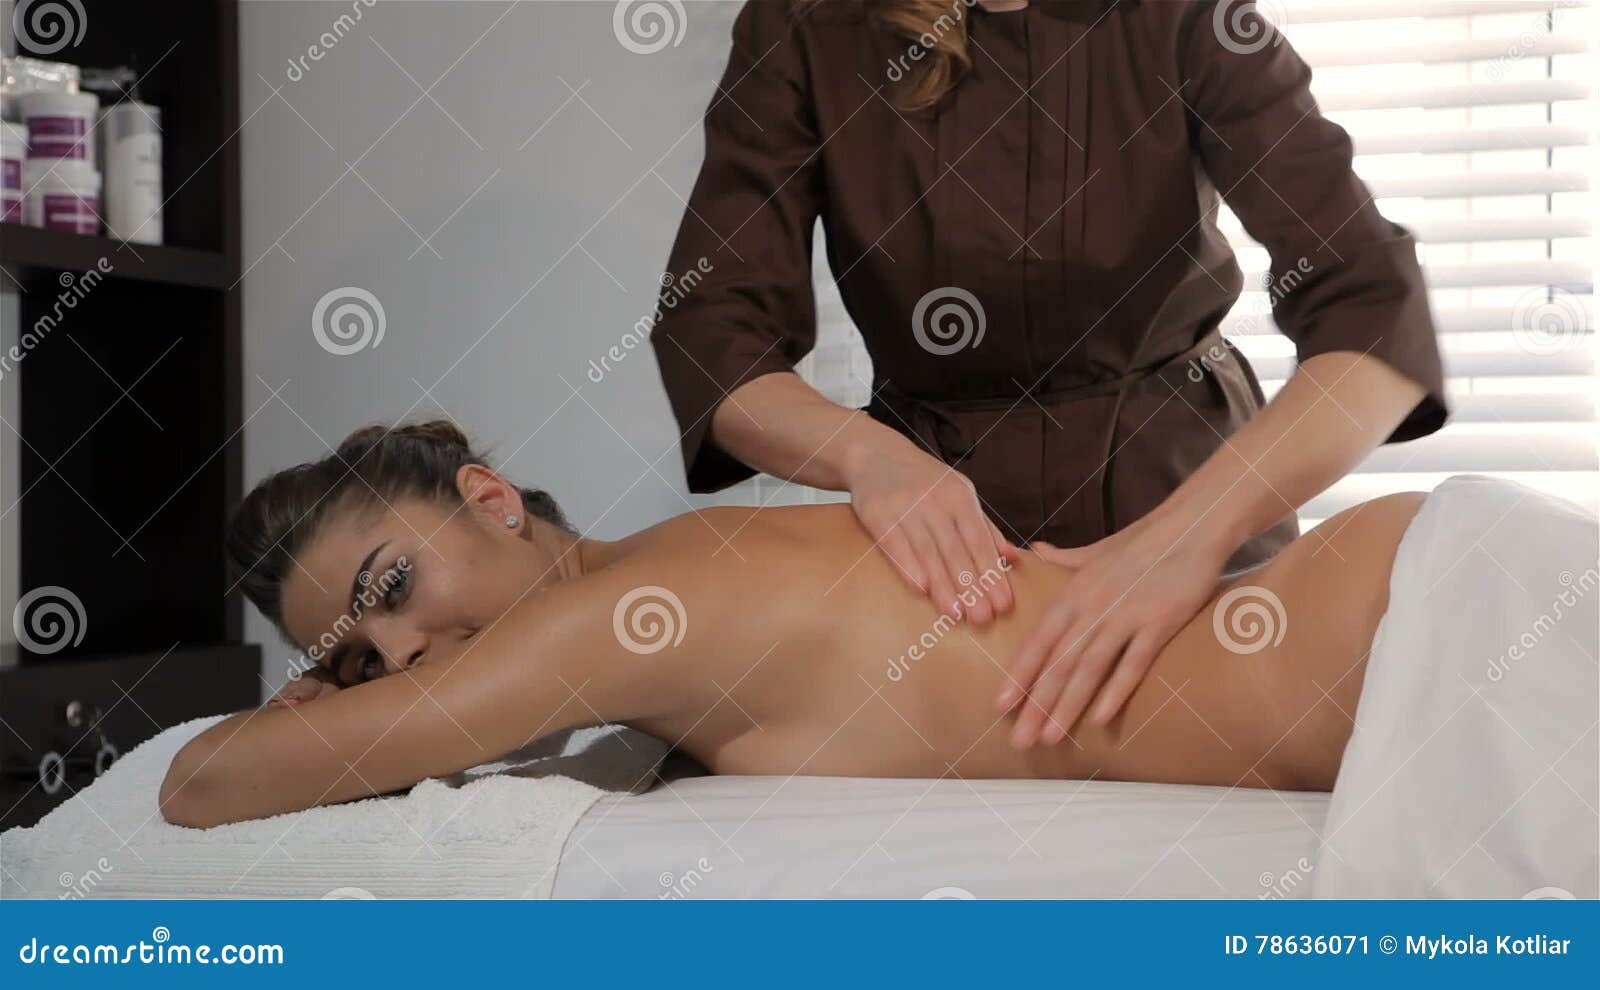 Girls Naked Massage